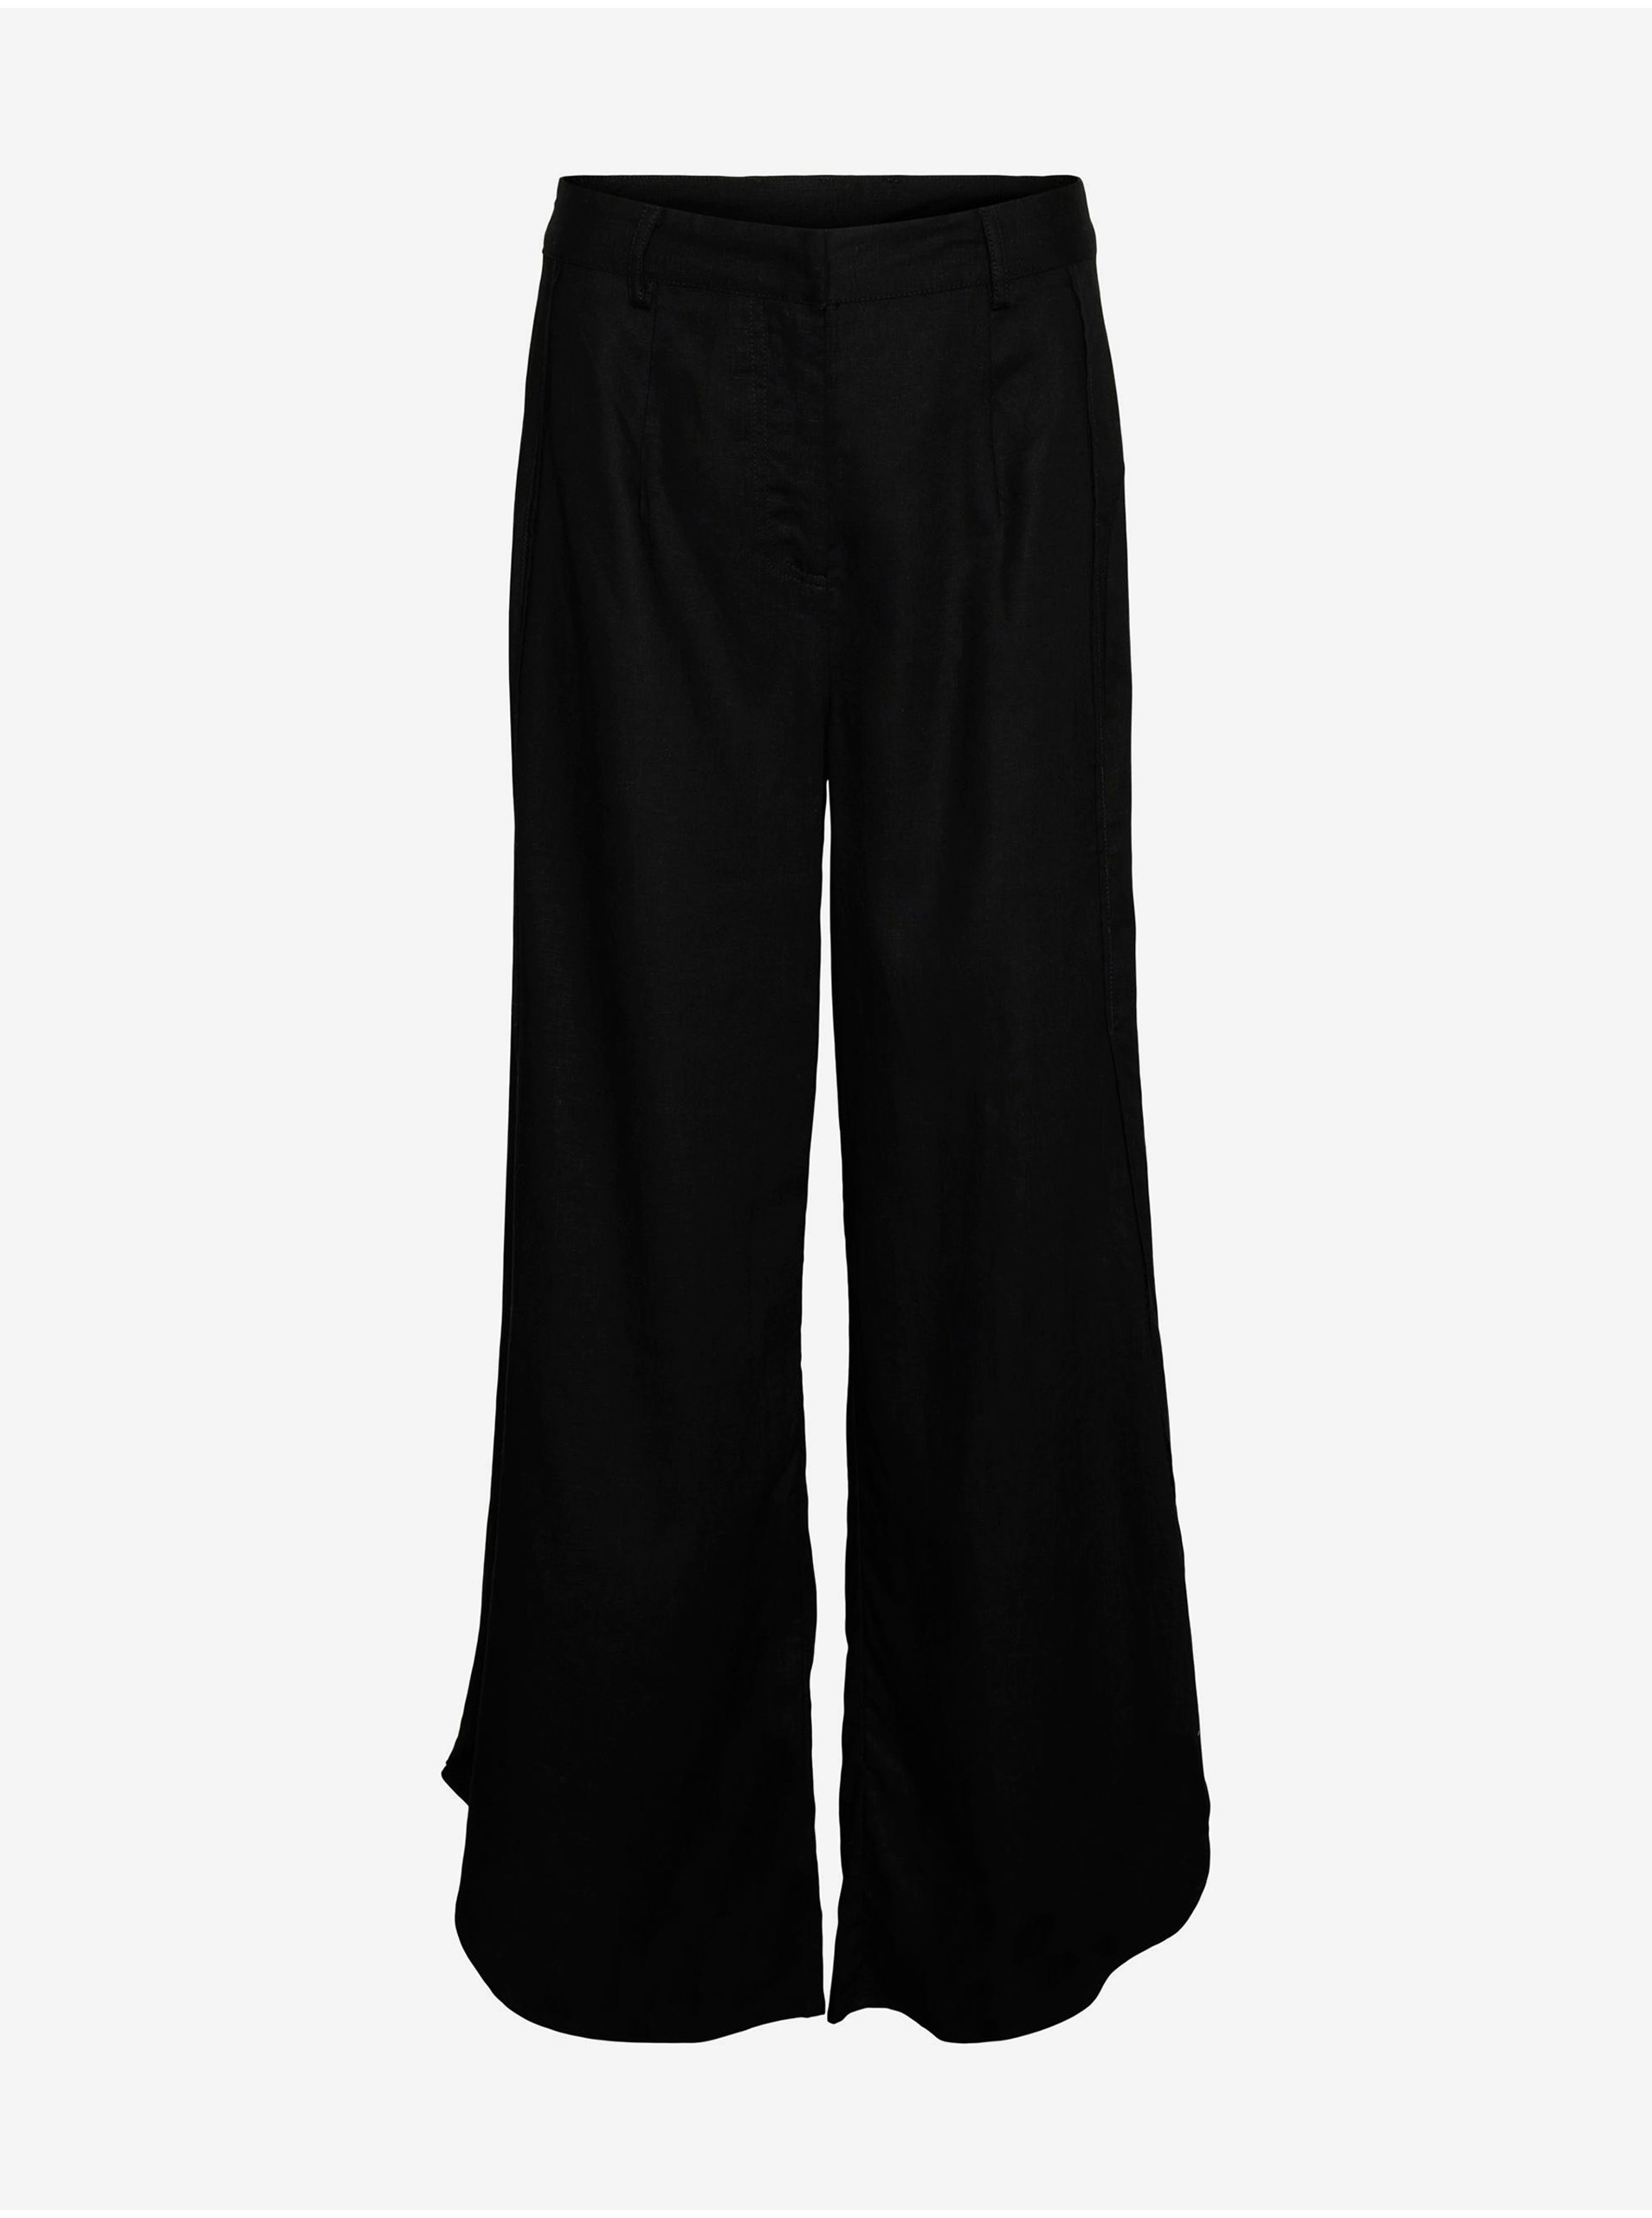 Black women's trousers with linen AWARE by VERO MODA Fia - Ladies